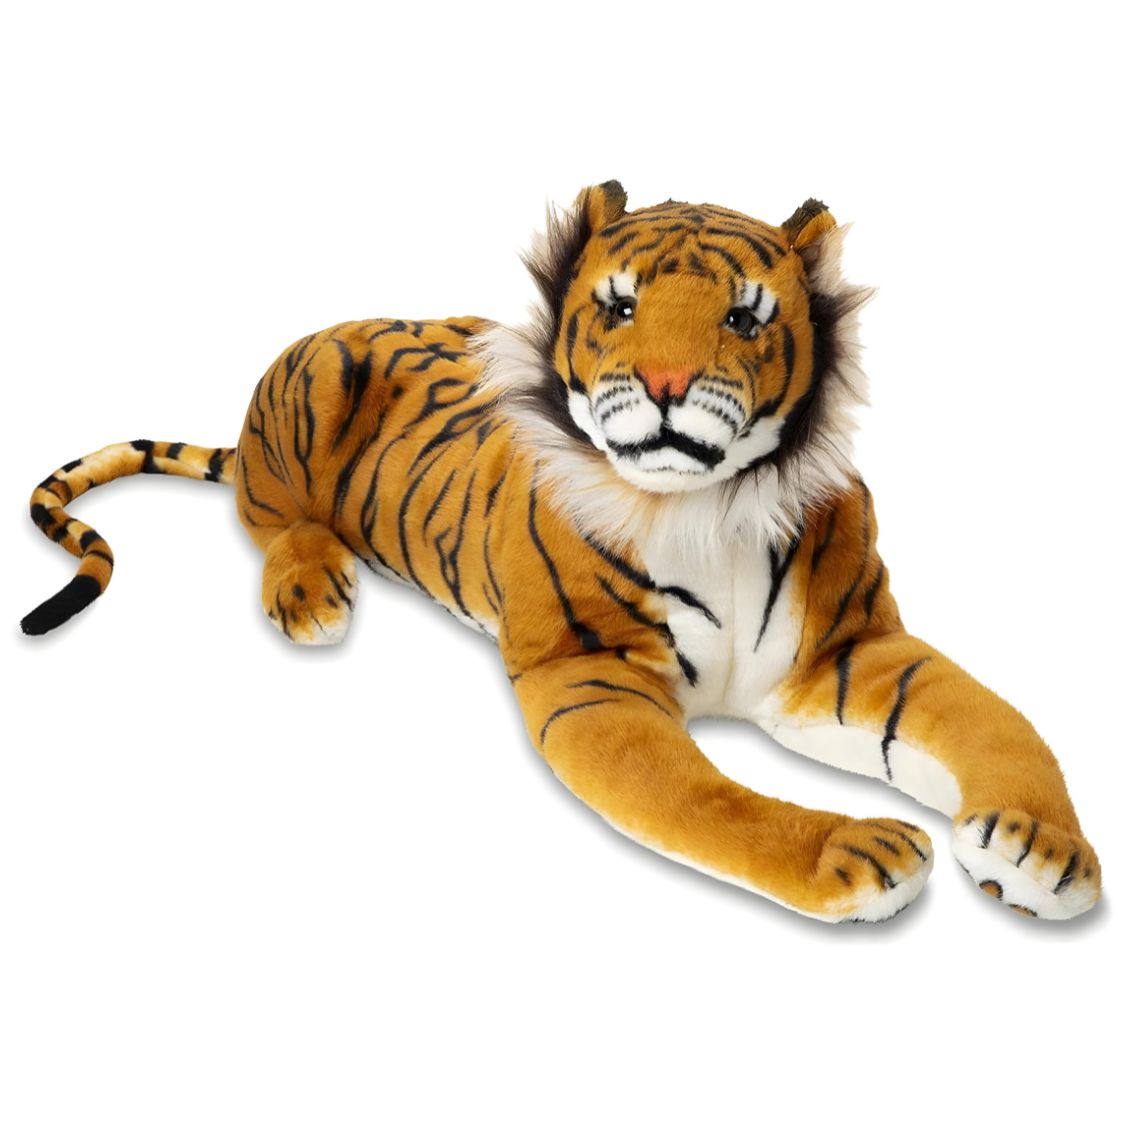 Special Tiger Plush Rental